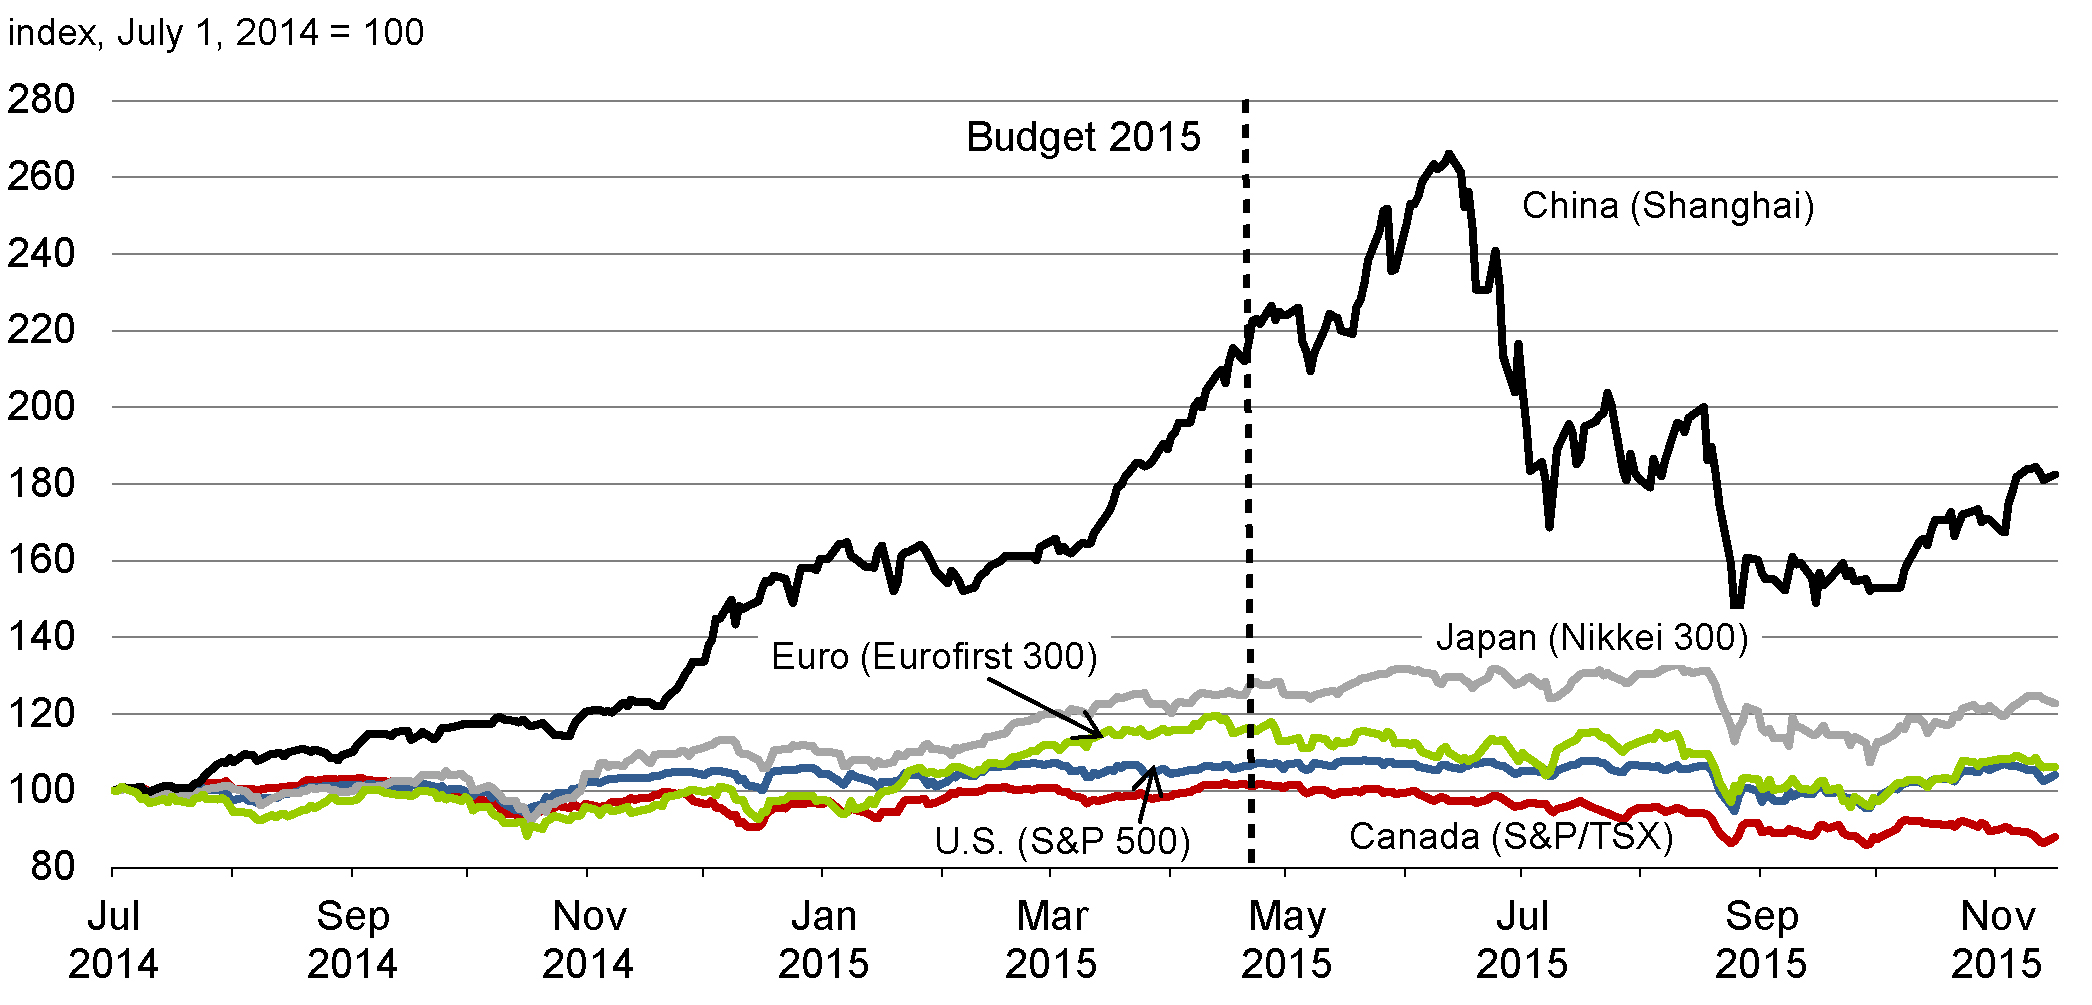 Chart 2.4 - Global Equity Market Indexes